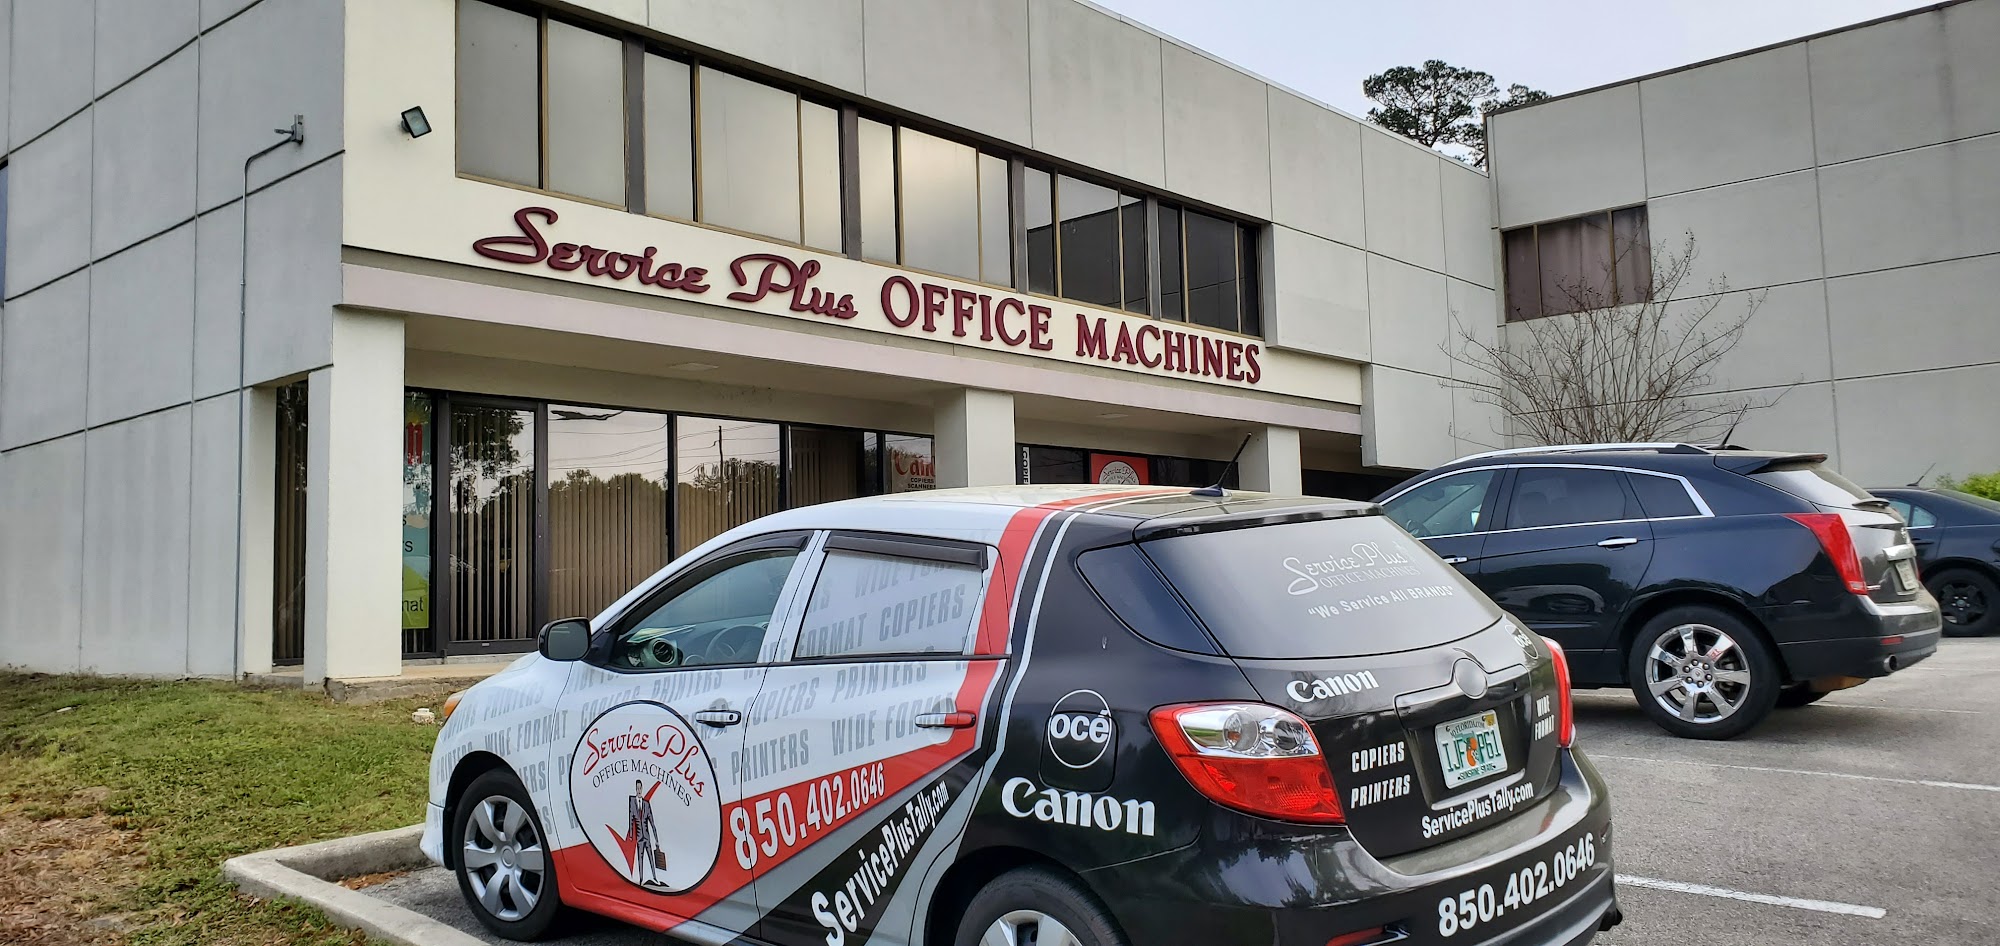 Service Plus Office Machines